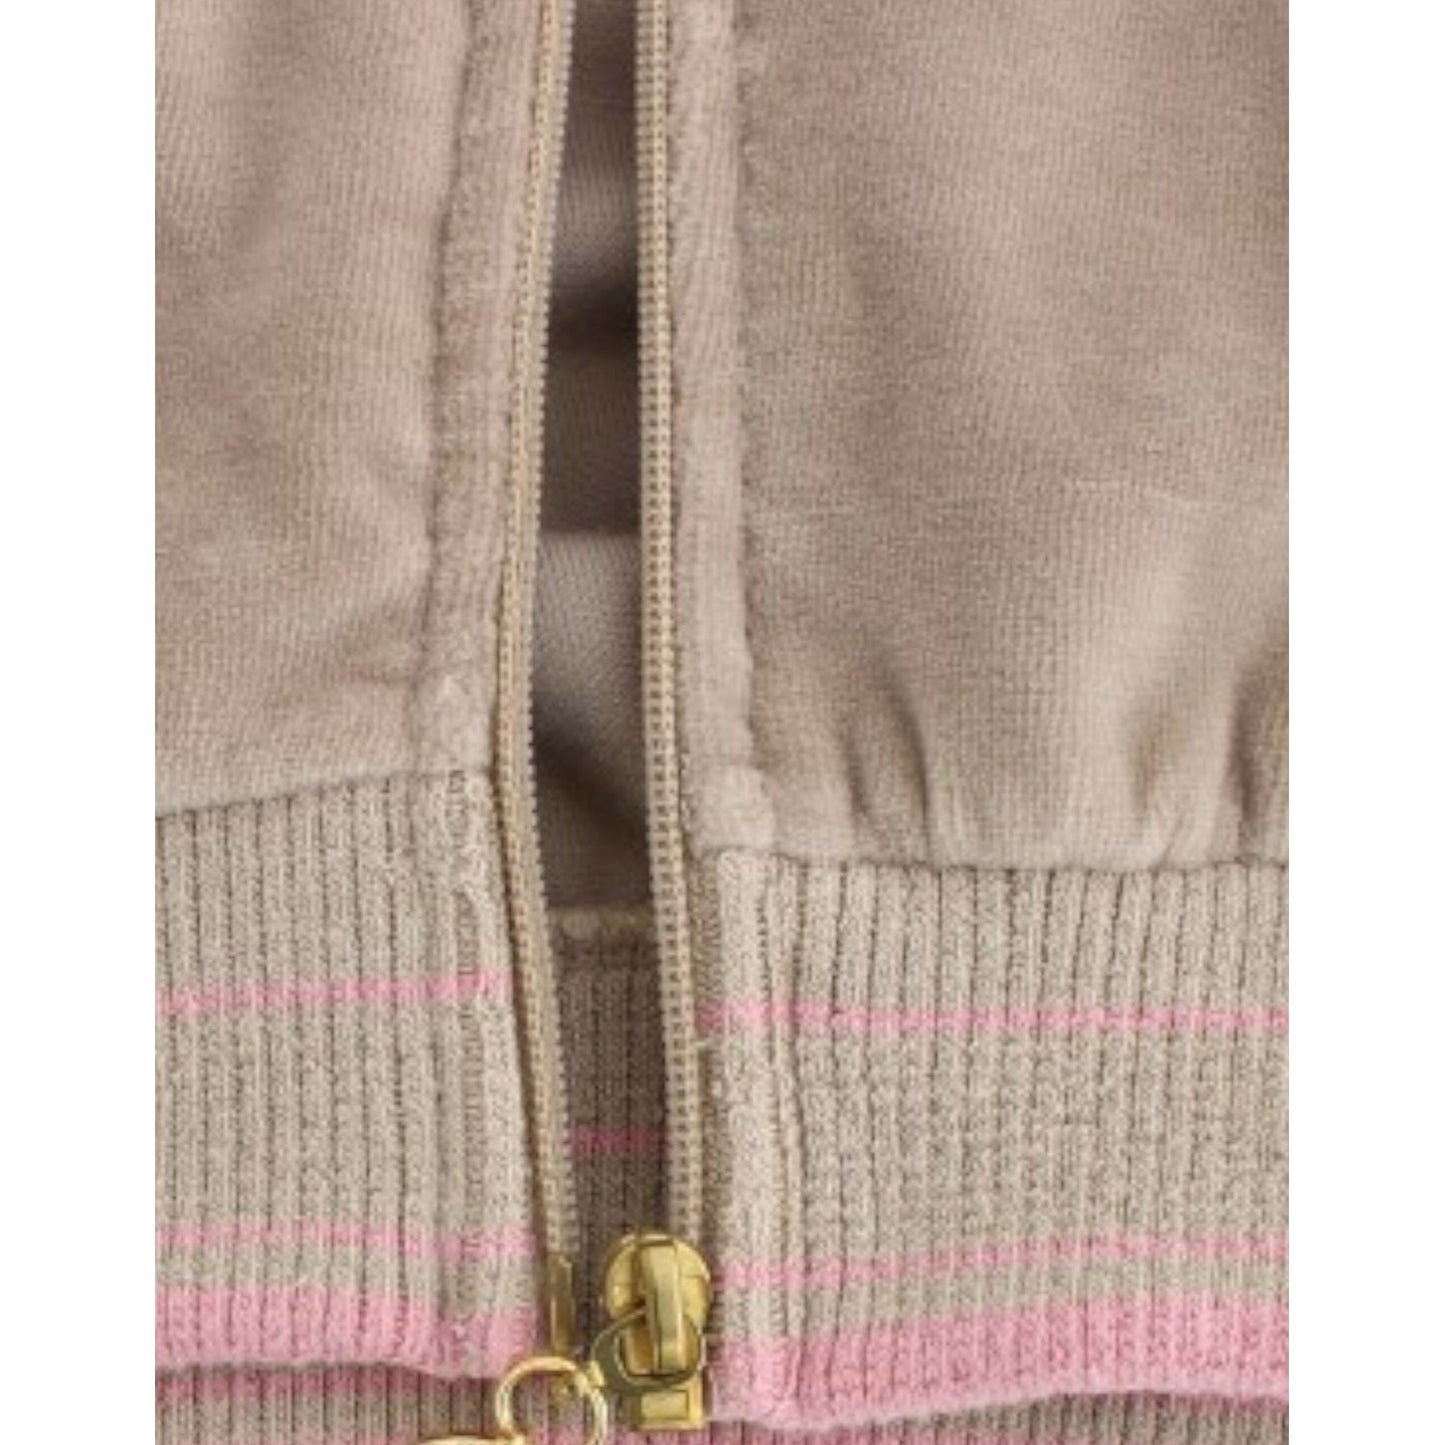 Cavalli Beige Zip Cardigan with Gold Tone Accents beige-velvet-zipup-sweater 9105-beige-velvet-zipup-sweater-5-scaled-a7943099-a53.jpg